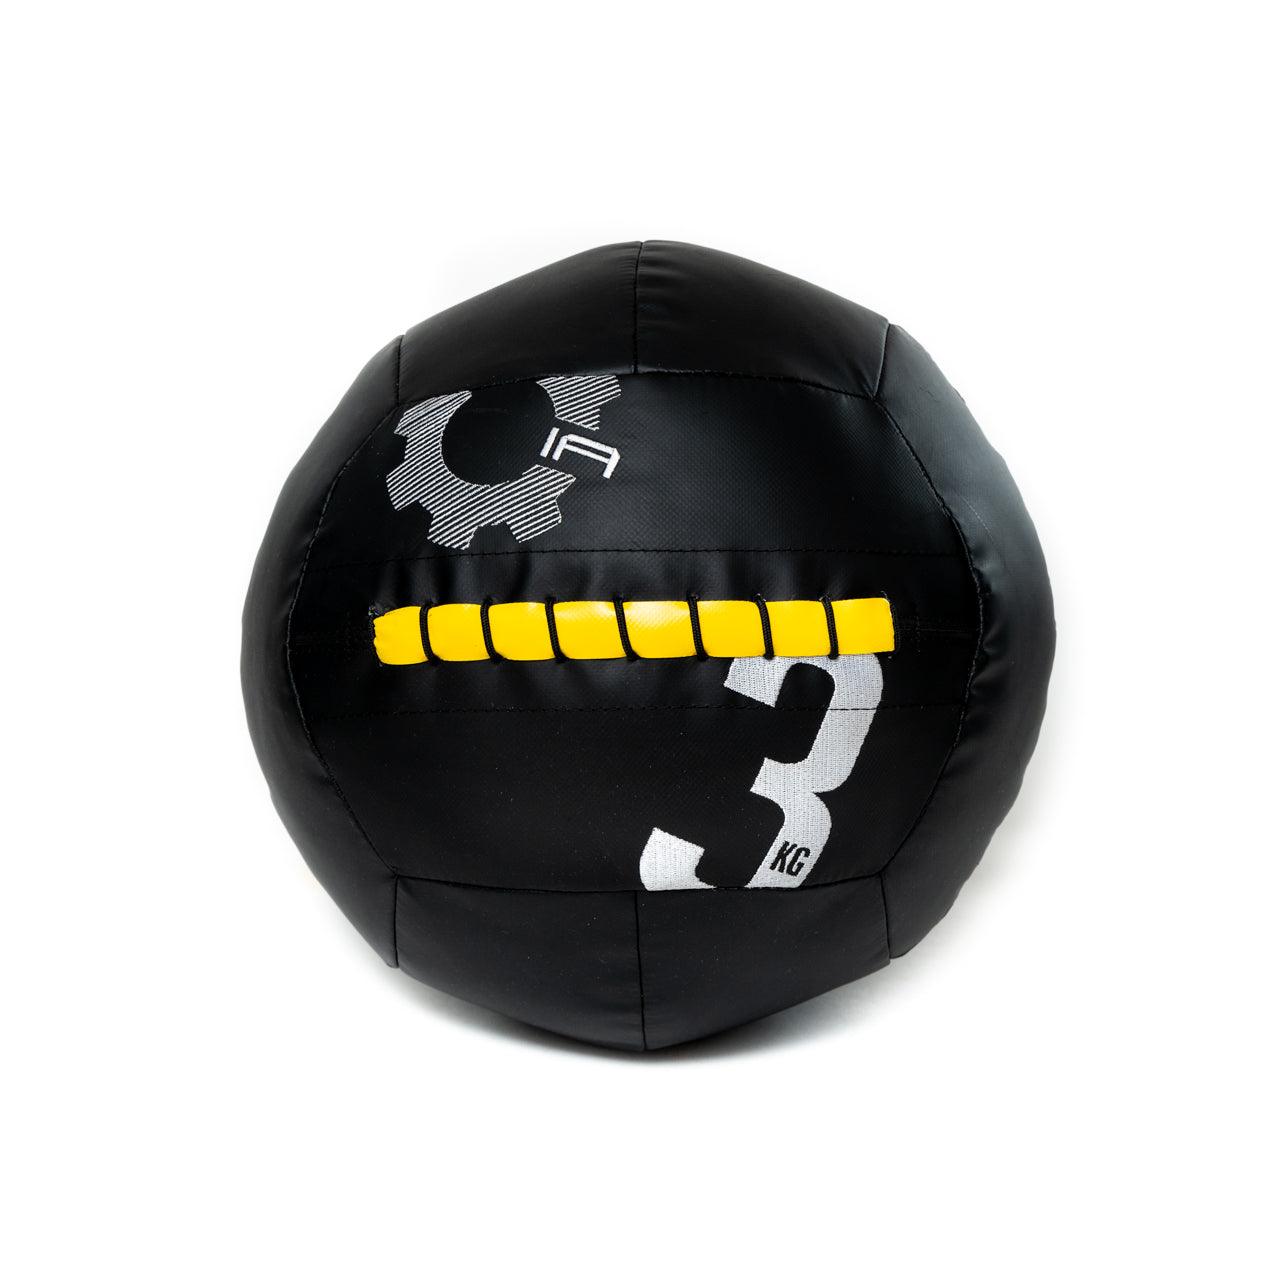 3kg Medicine Ball - V3 - Industrial Athletic